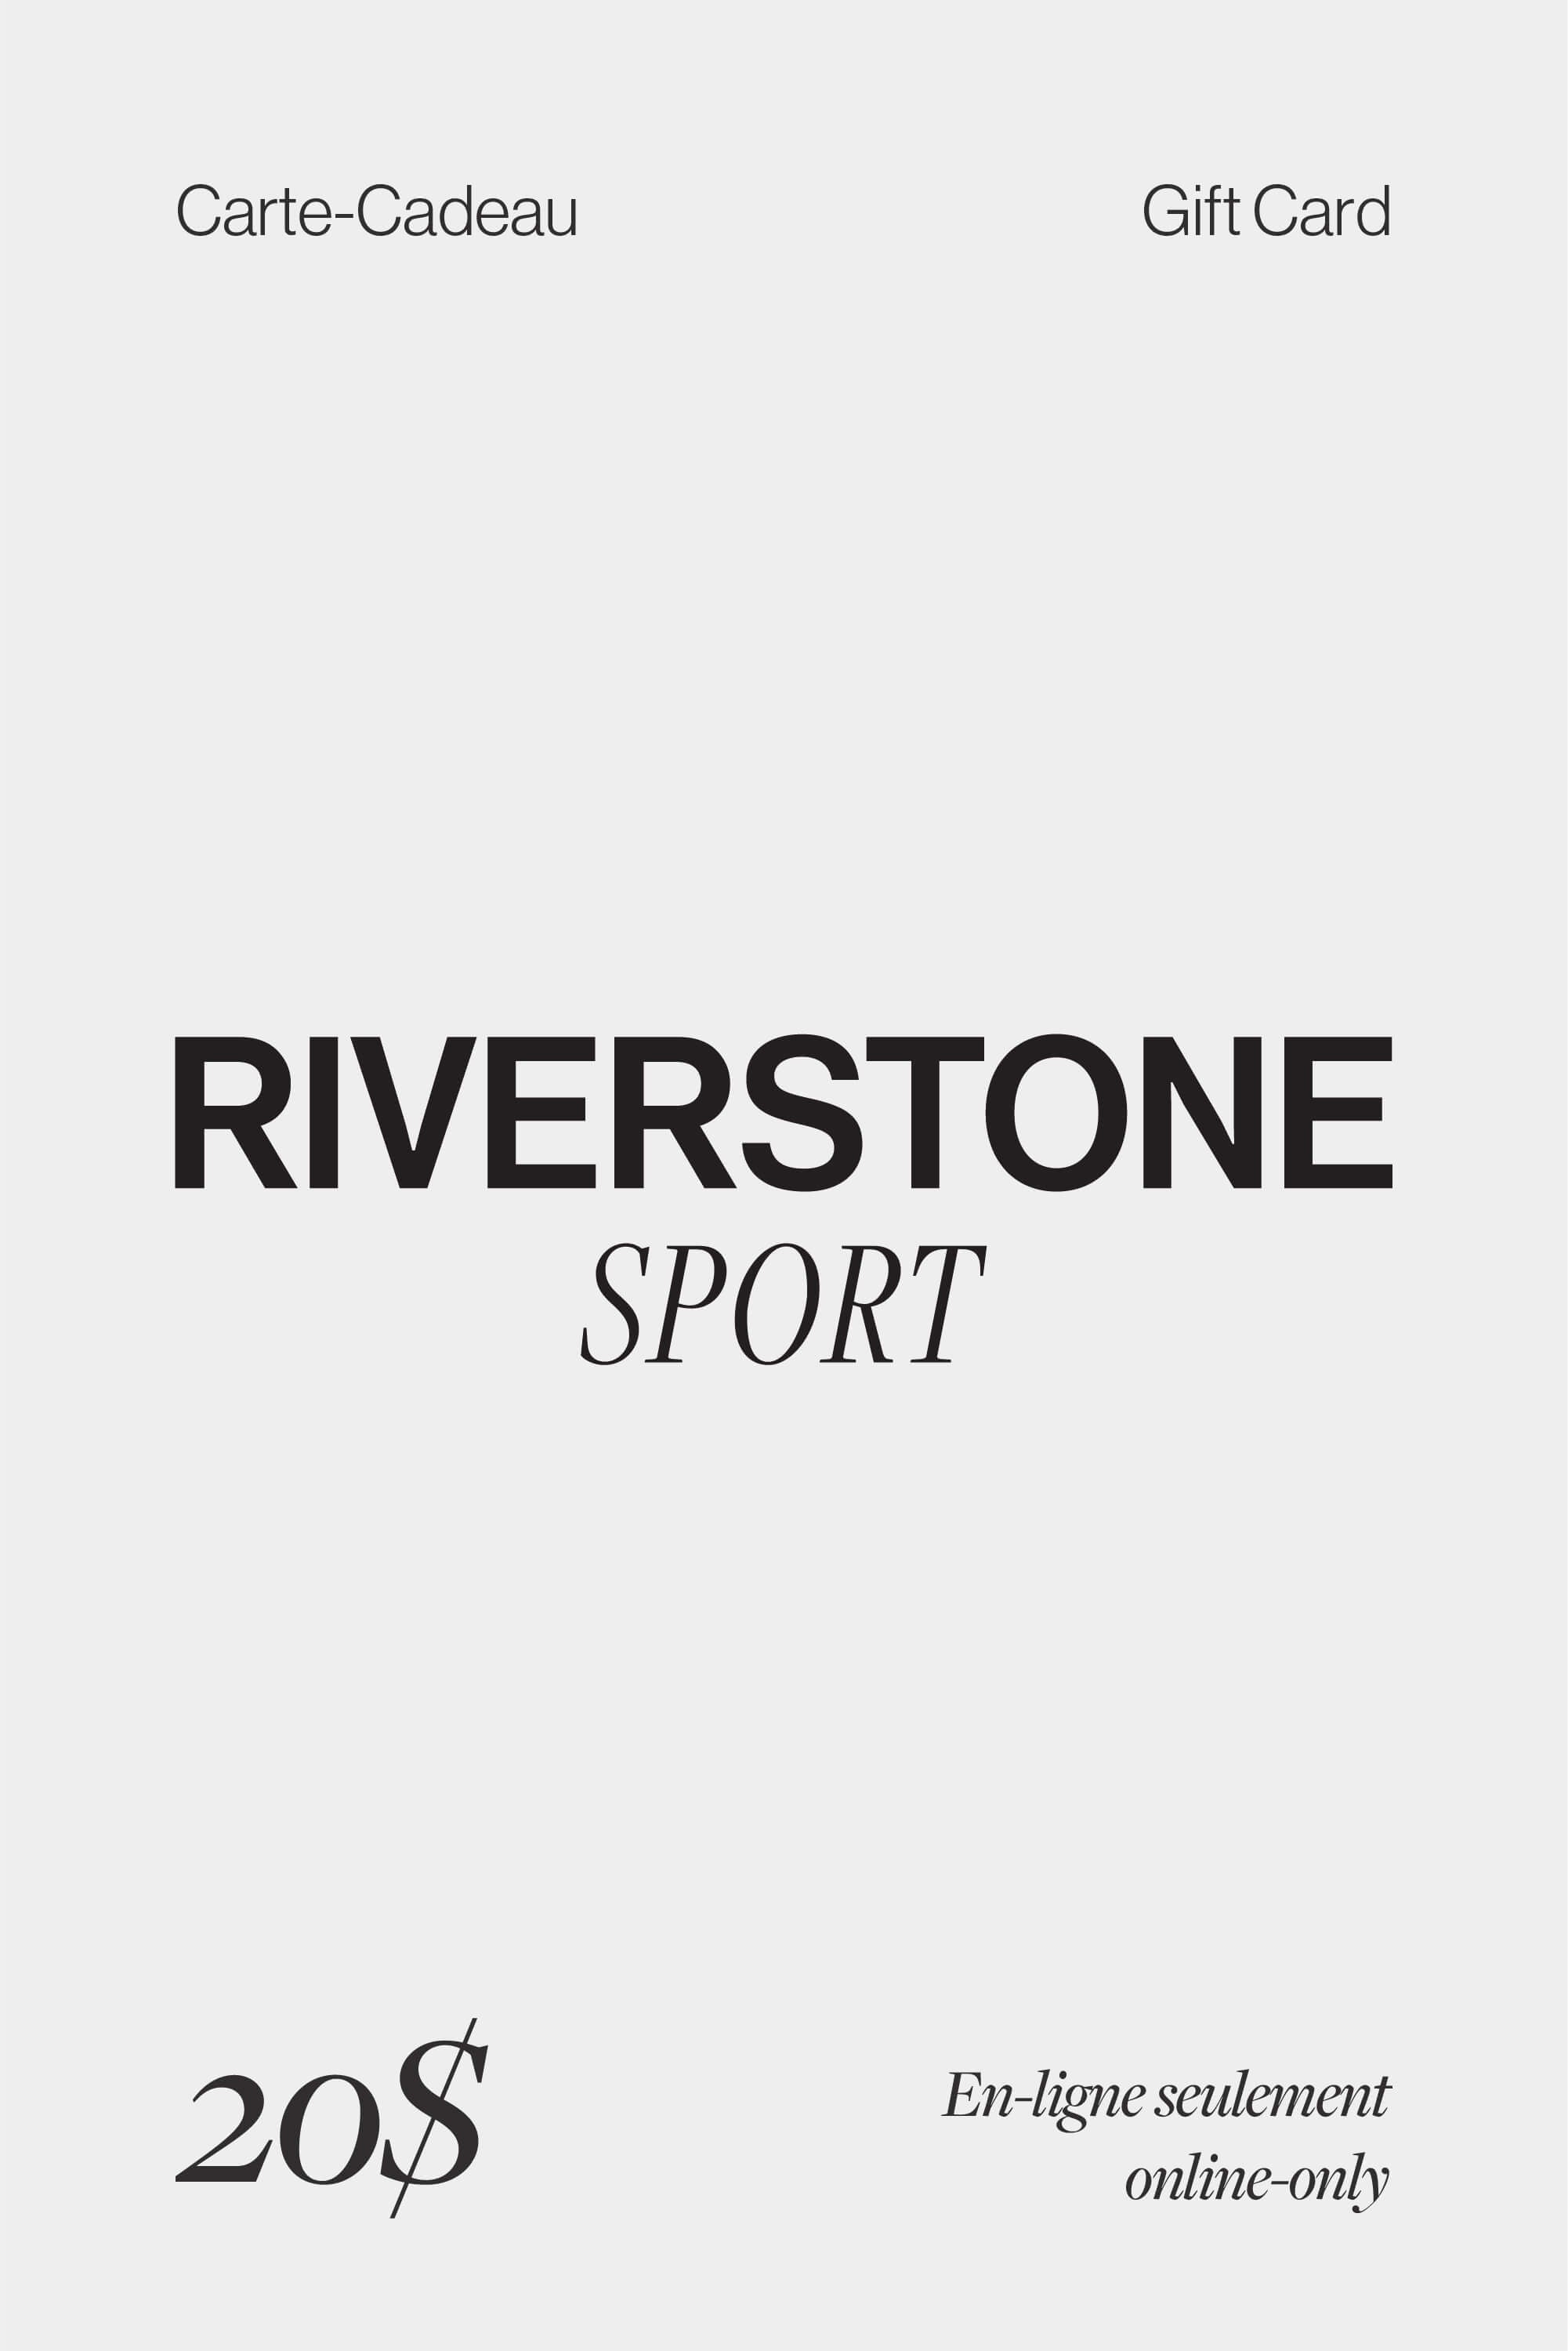 Online Riverstone Sport Gift Card